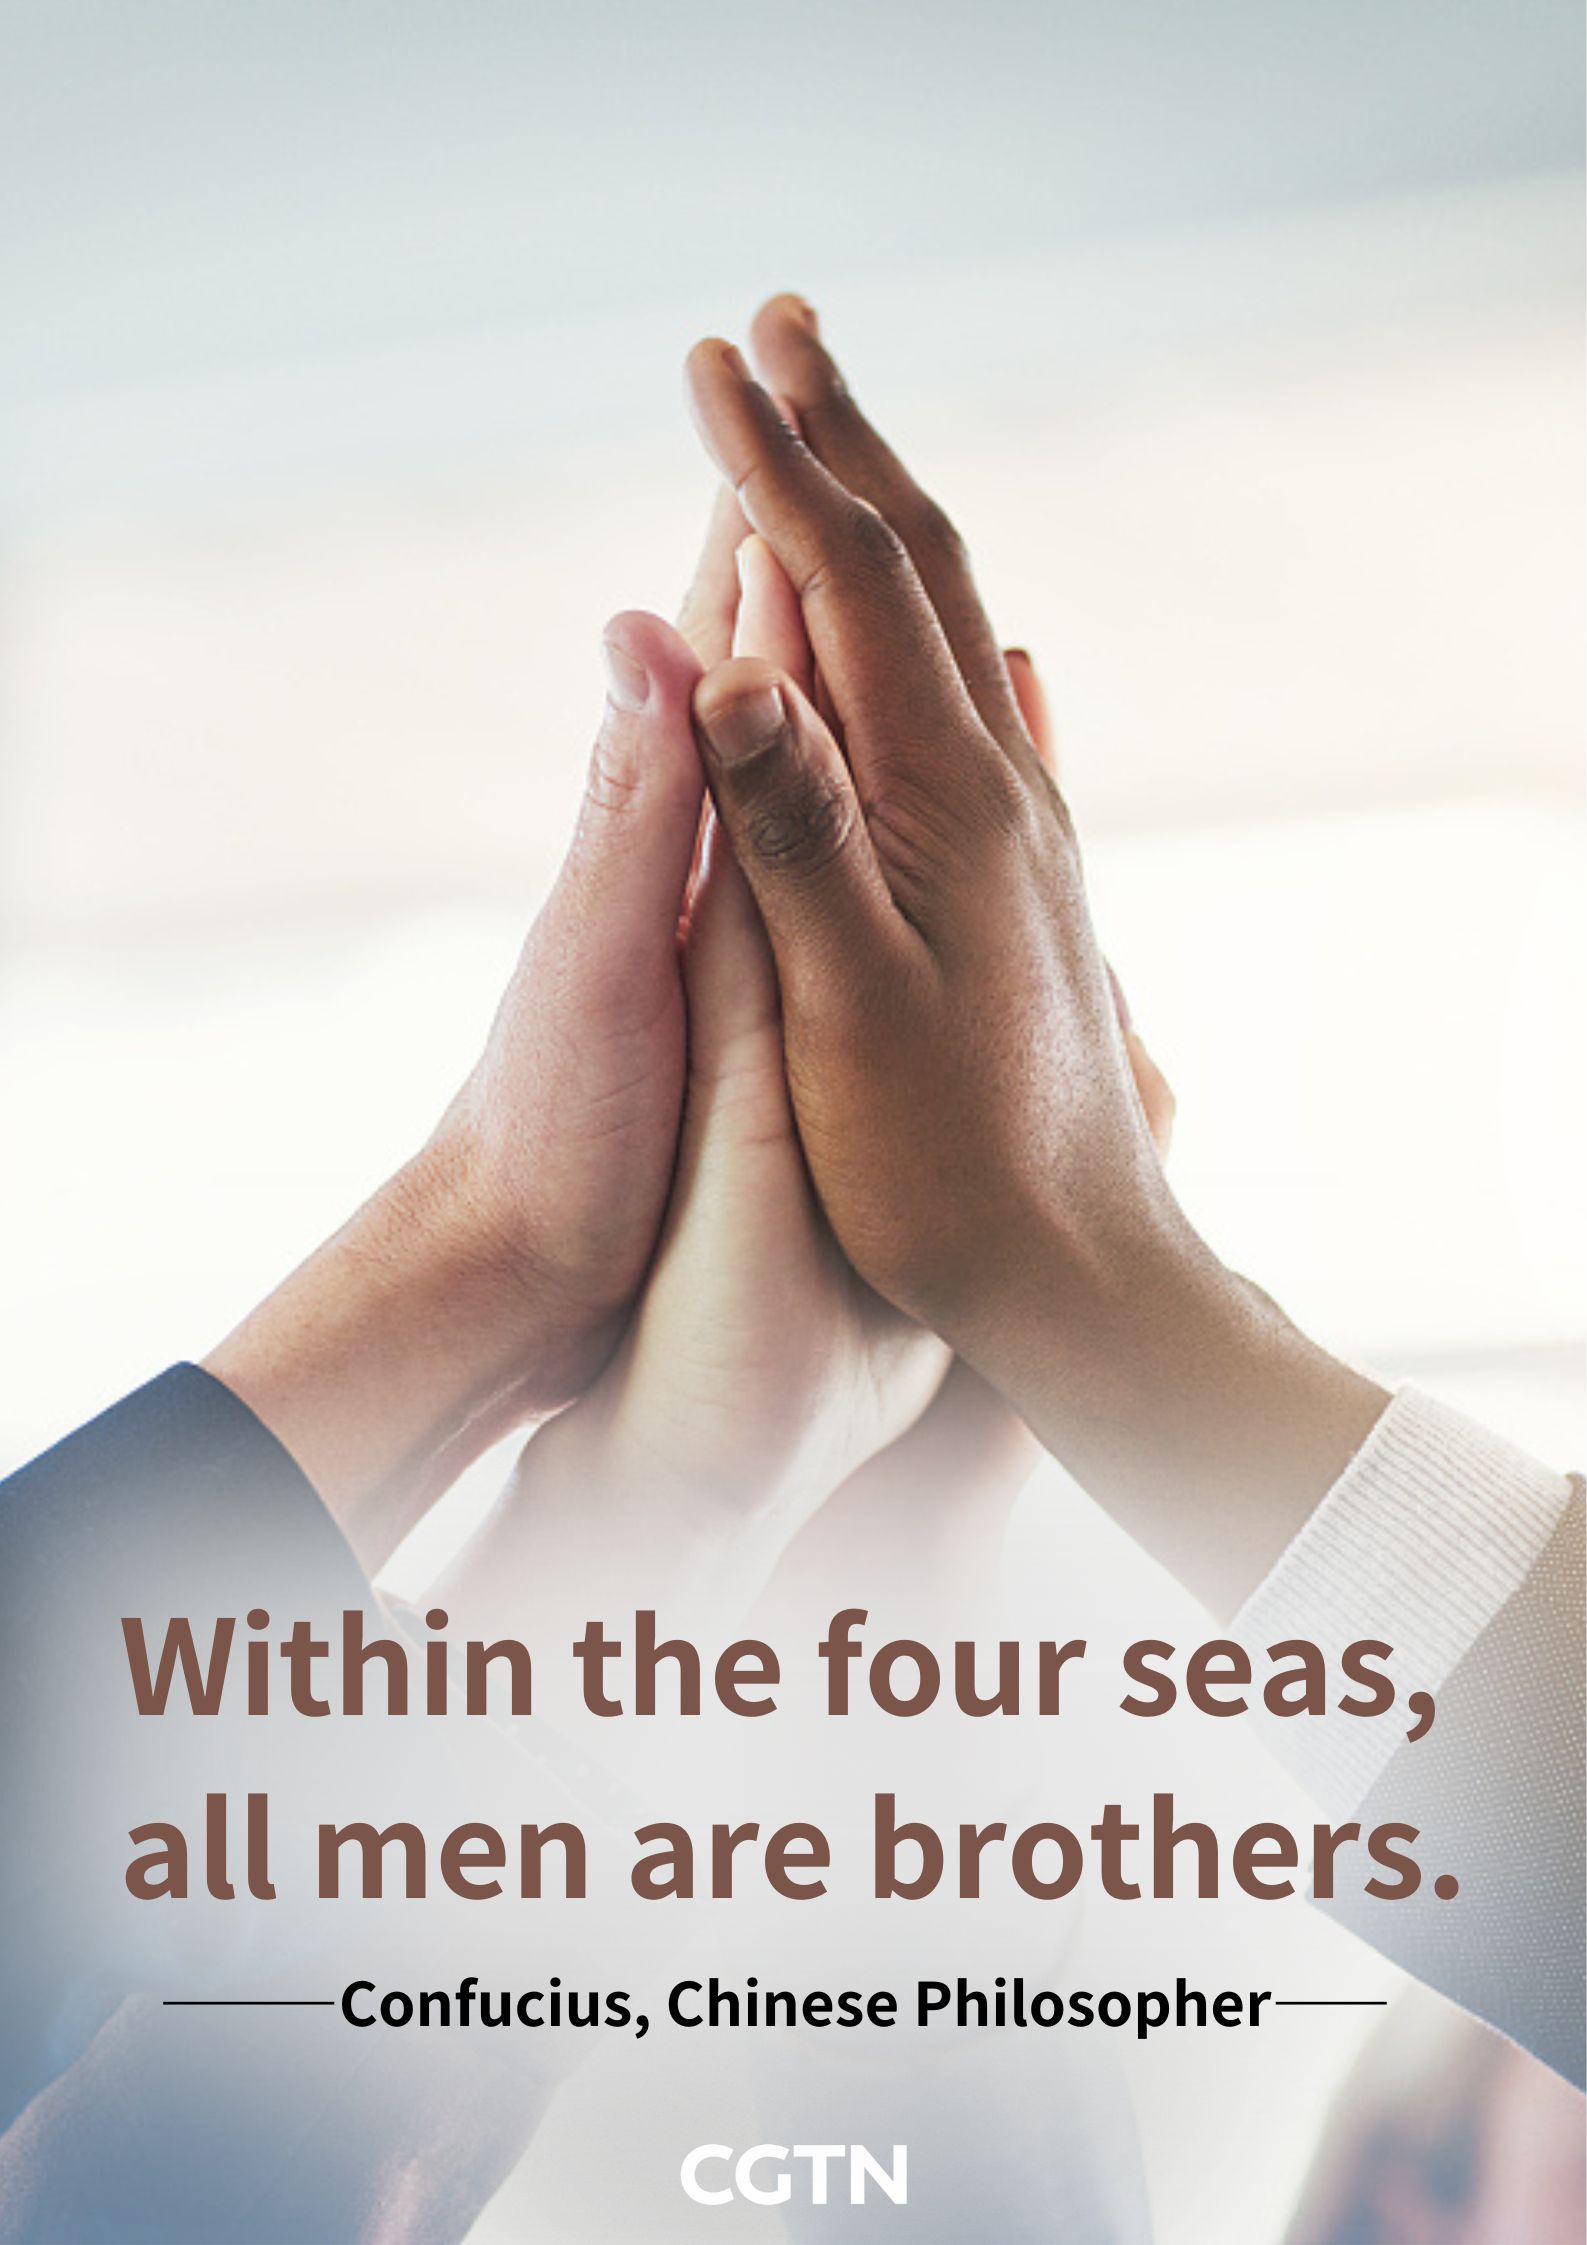 Confucius quote: All men are brothers